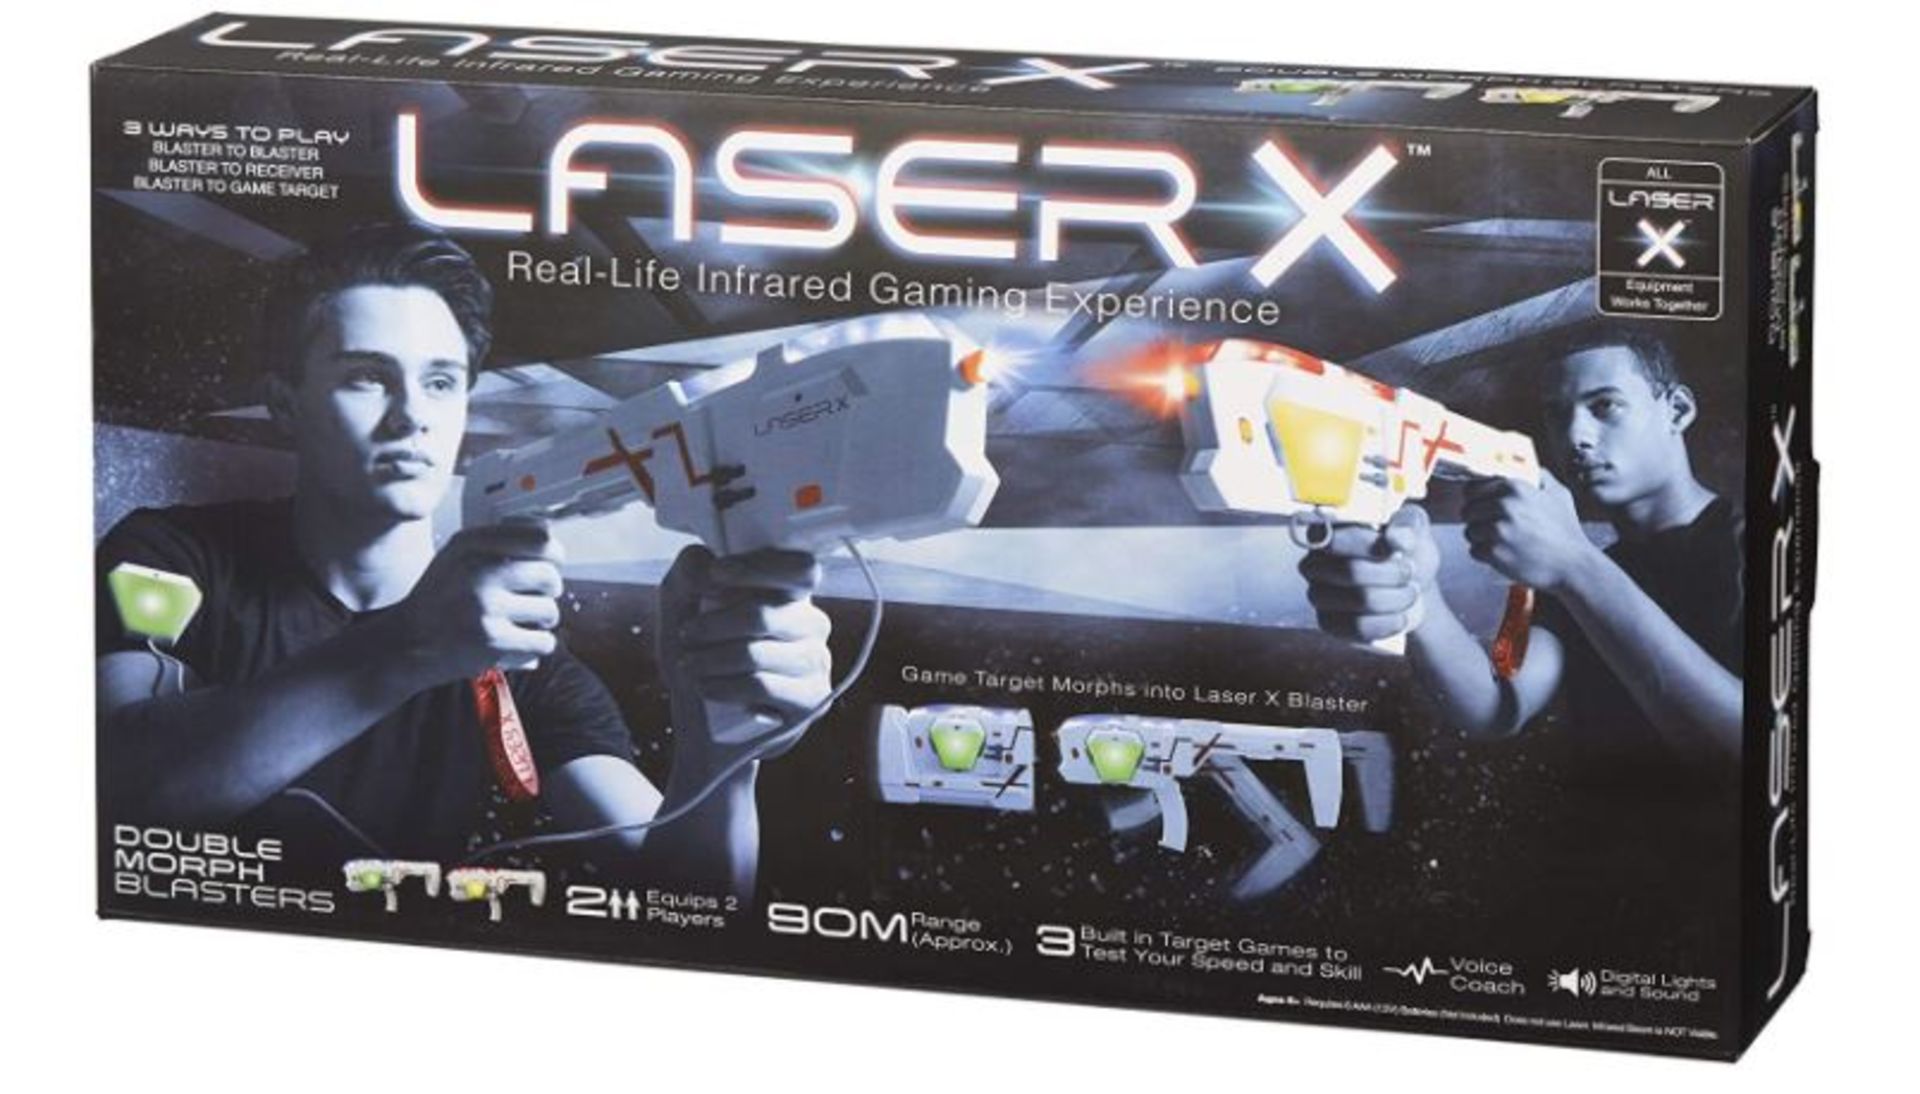 (R13D) 10x Items. 4x Laser X Double Morph Blasters. 6x Man’s Best Friend Ball Launcher.